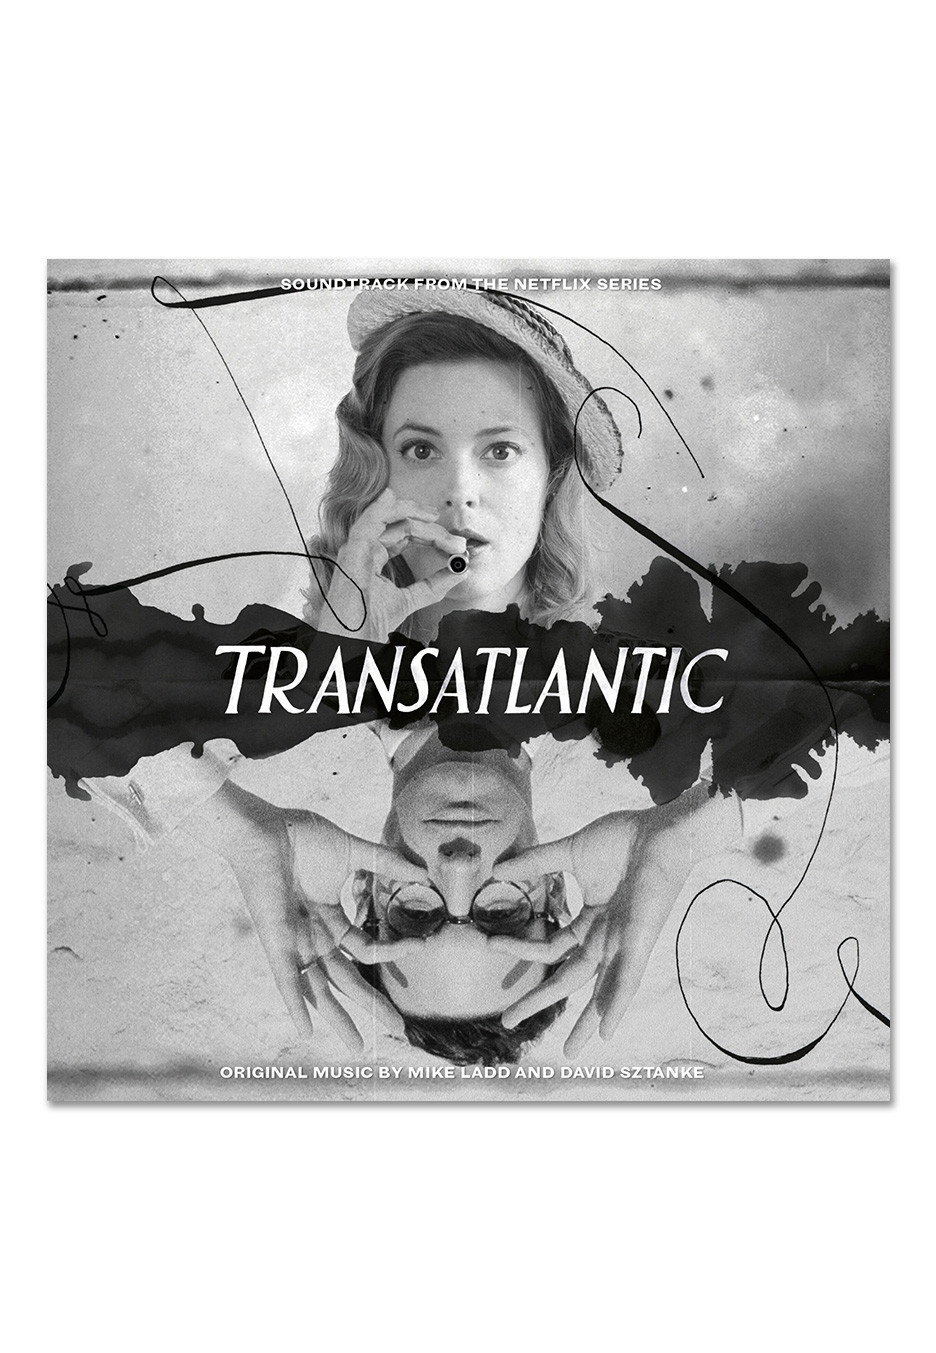 Transatlantic - Transatlantic OST (Mike Ladd / David Sztanke) - Vinyl